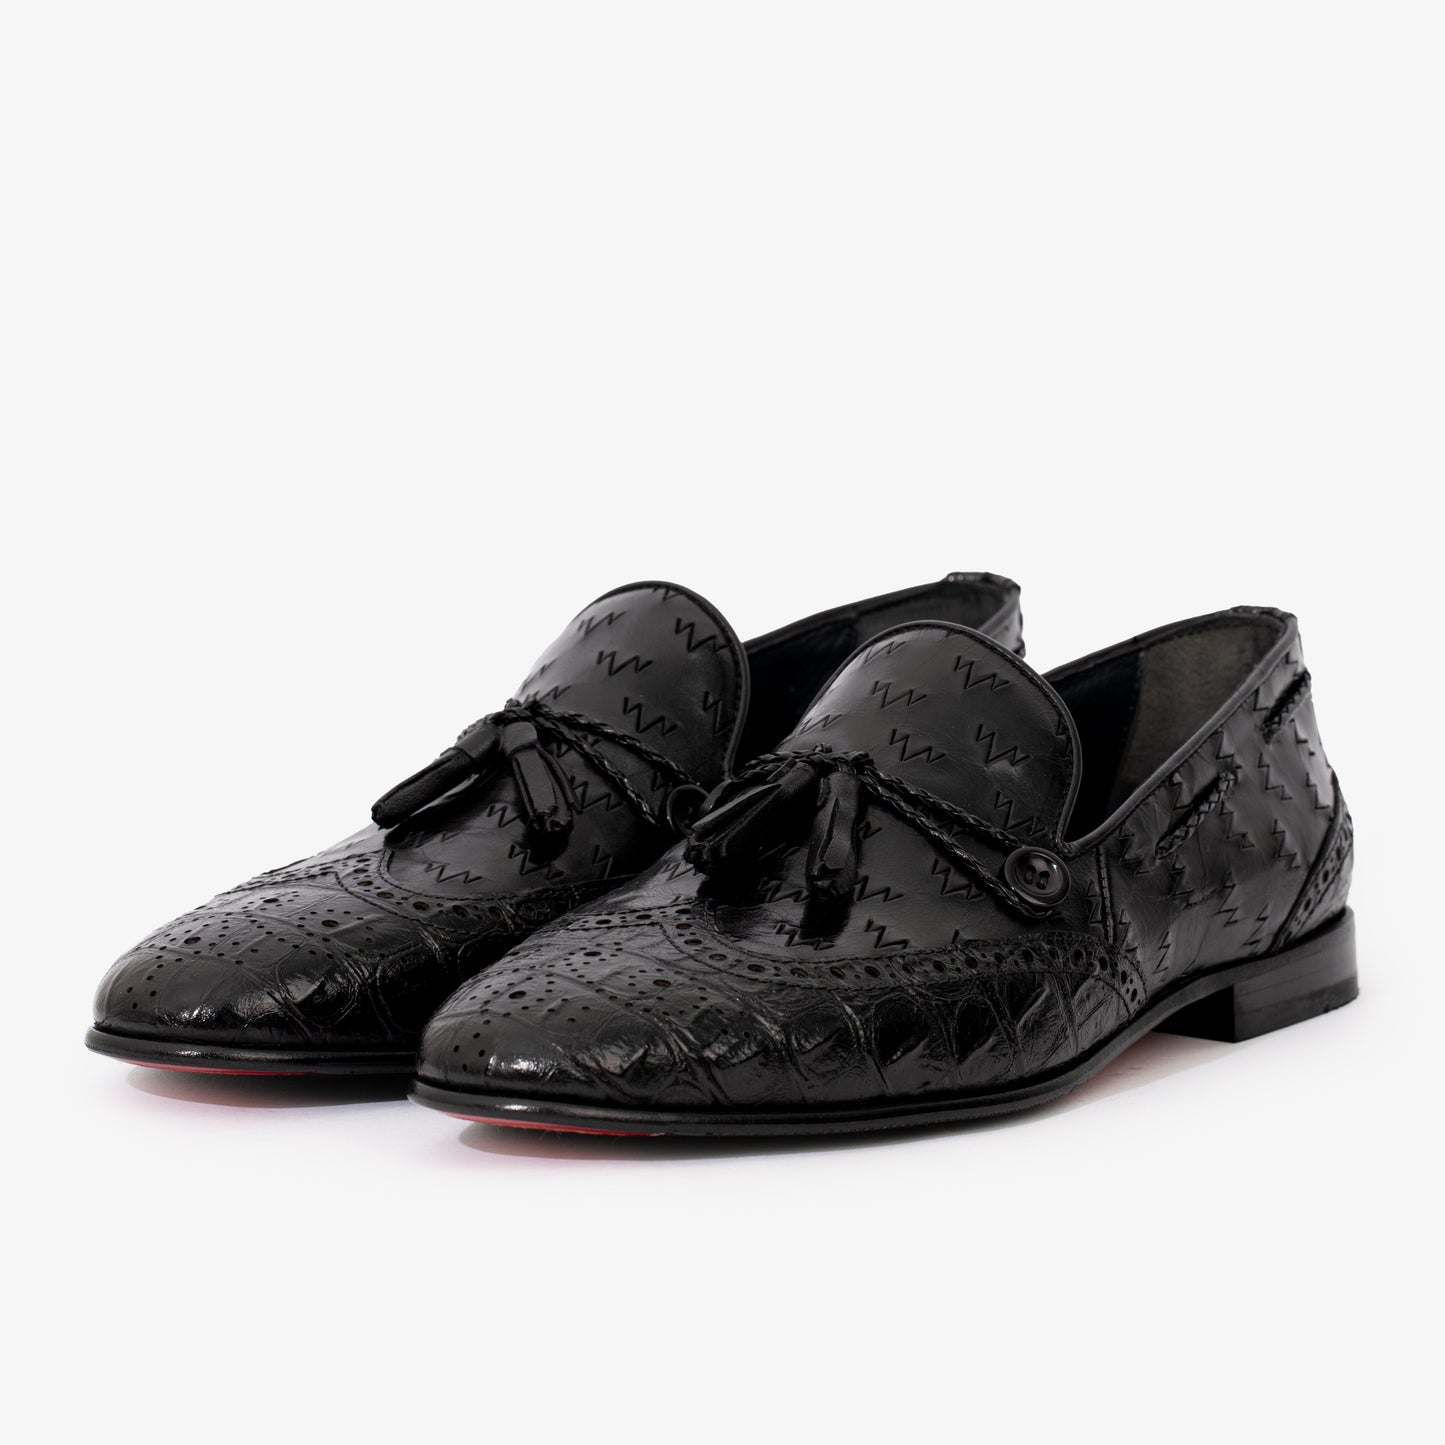 The Istanbul Black Leather Tassel Loafer Men Shoe